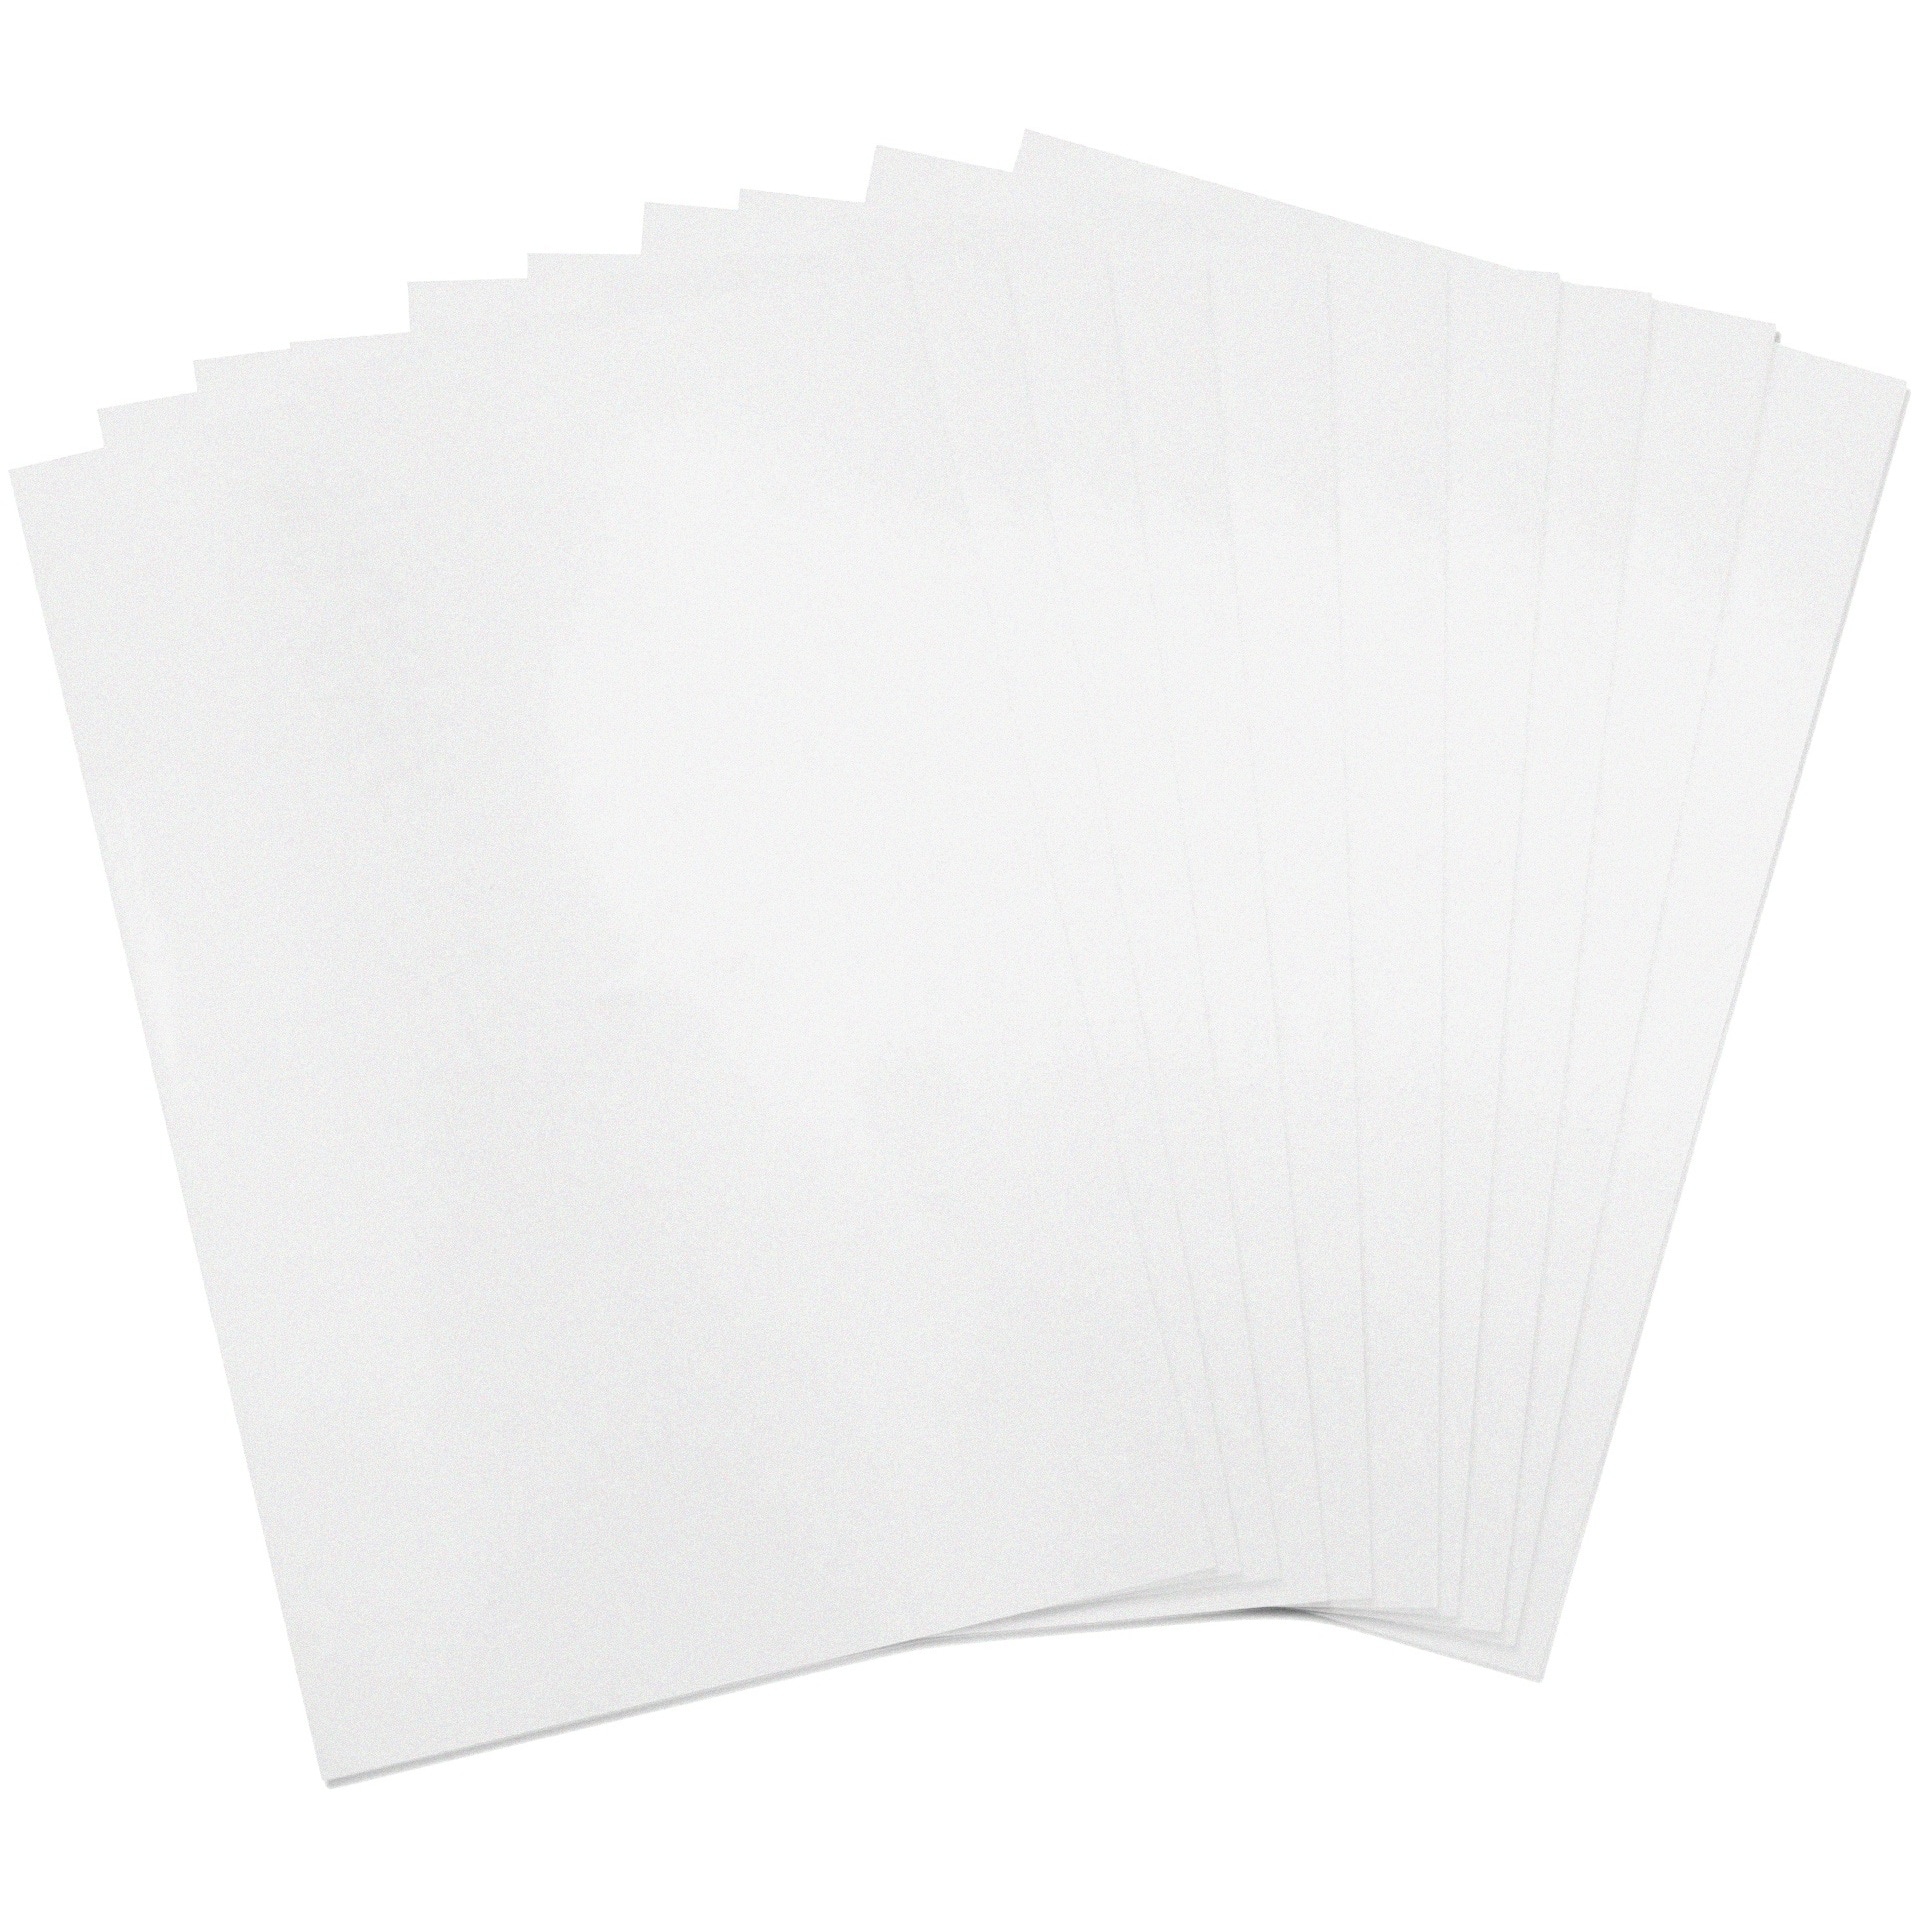 Sizzix® Surfacez® Printable Shrink Plastic Sheets, 10ct.